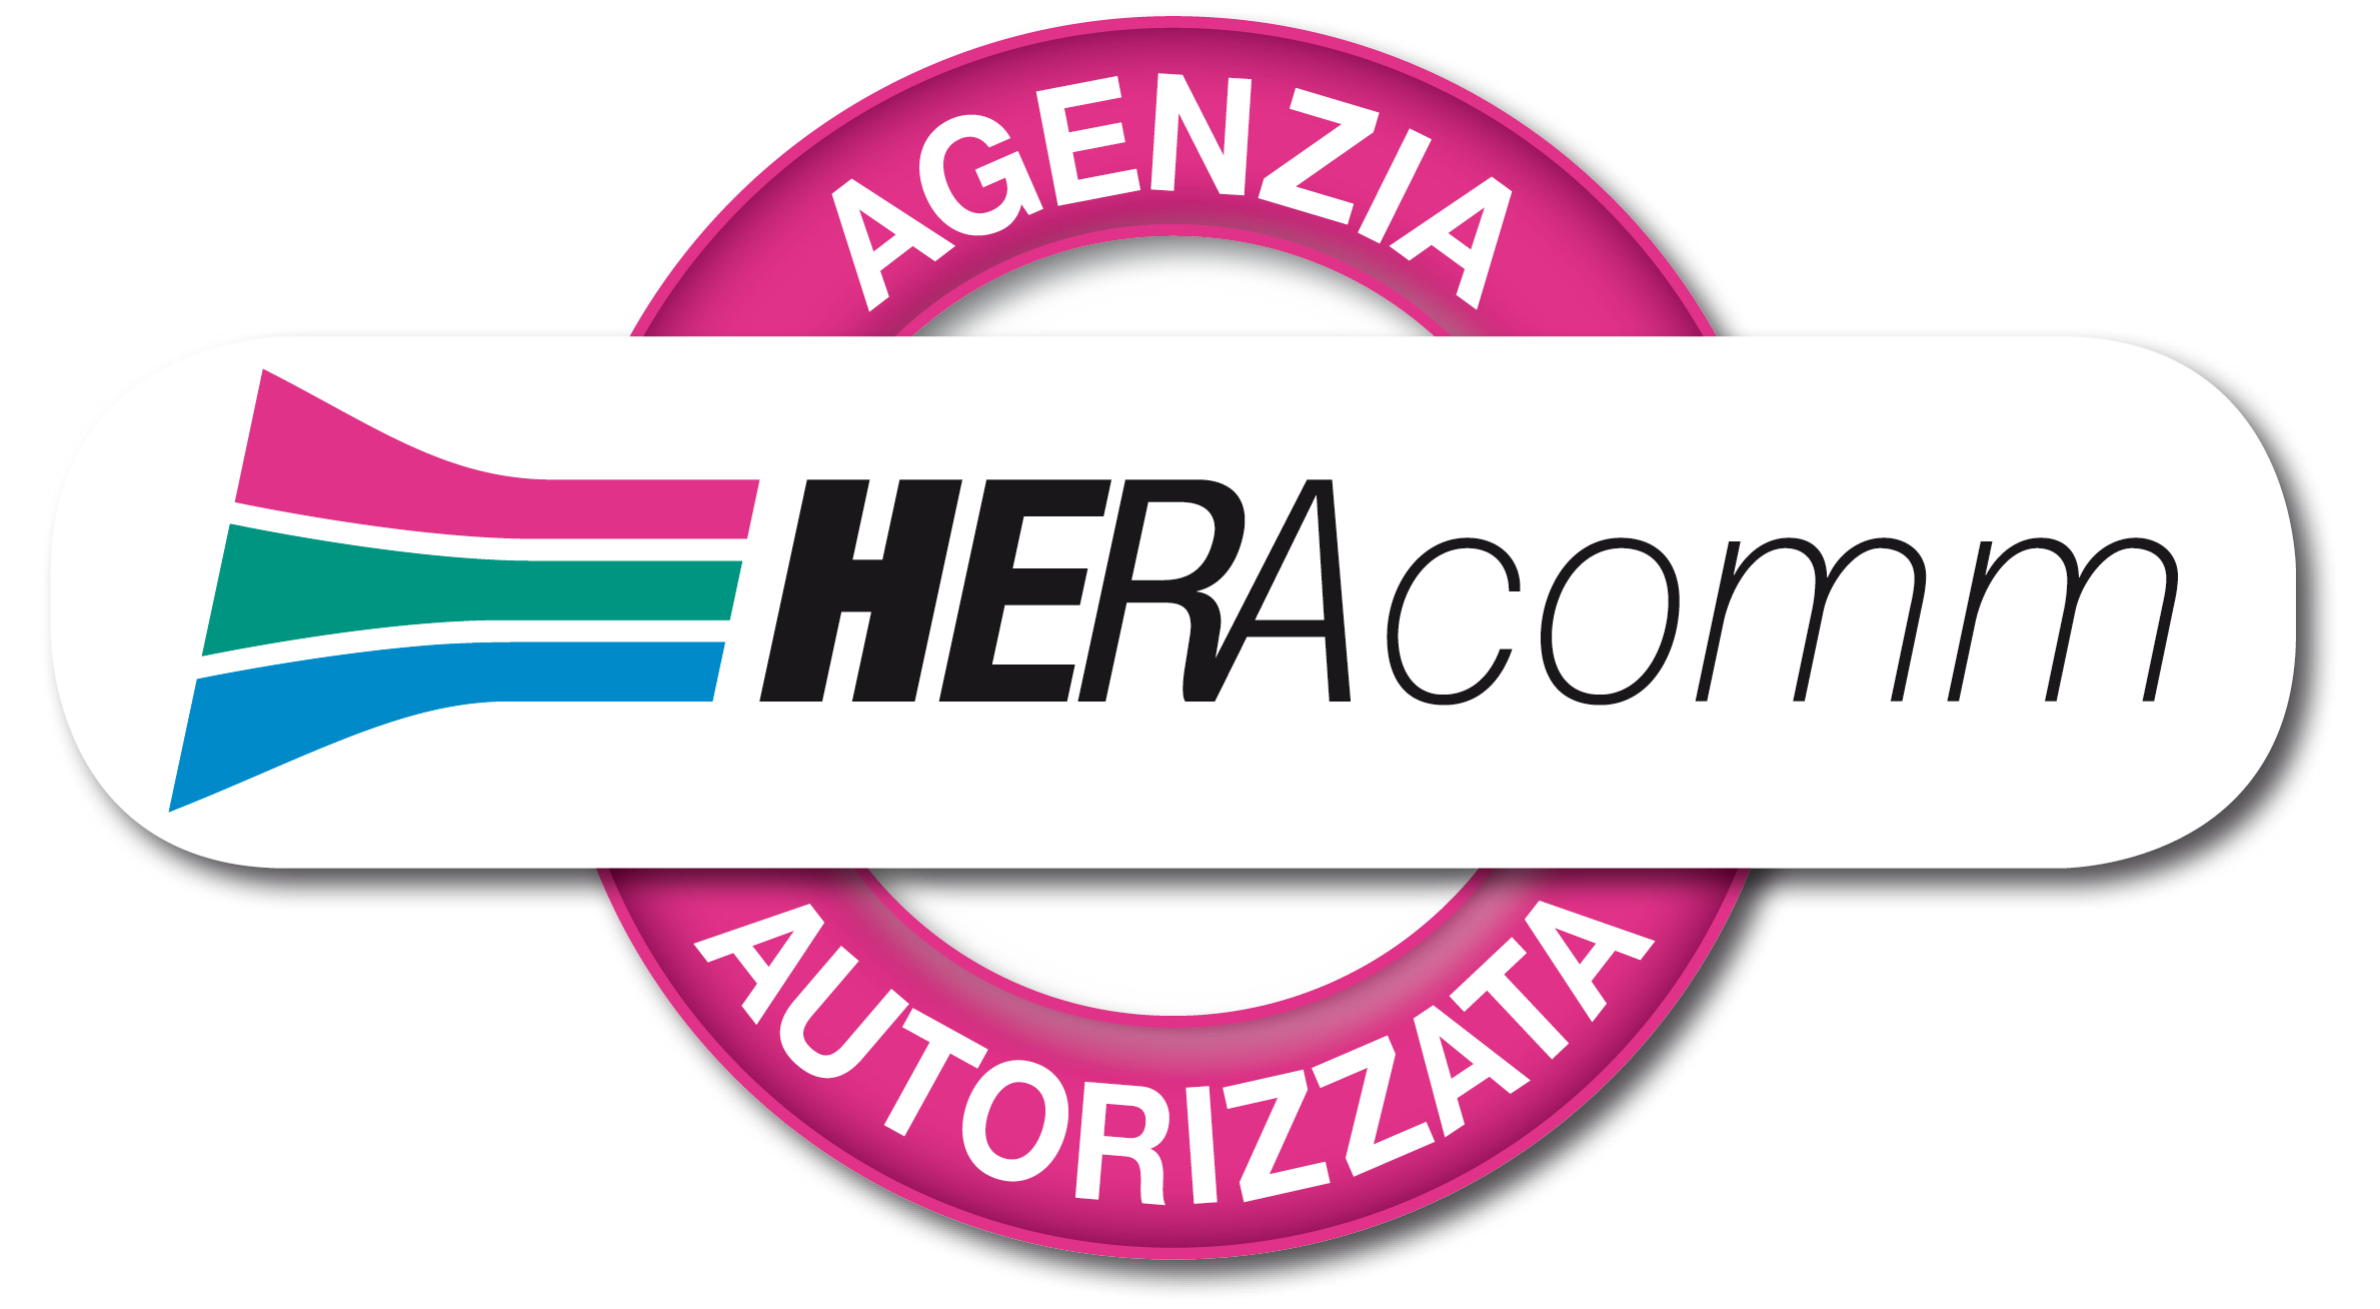 Heracomm